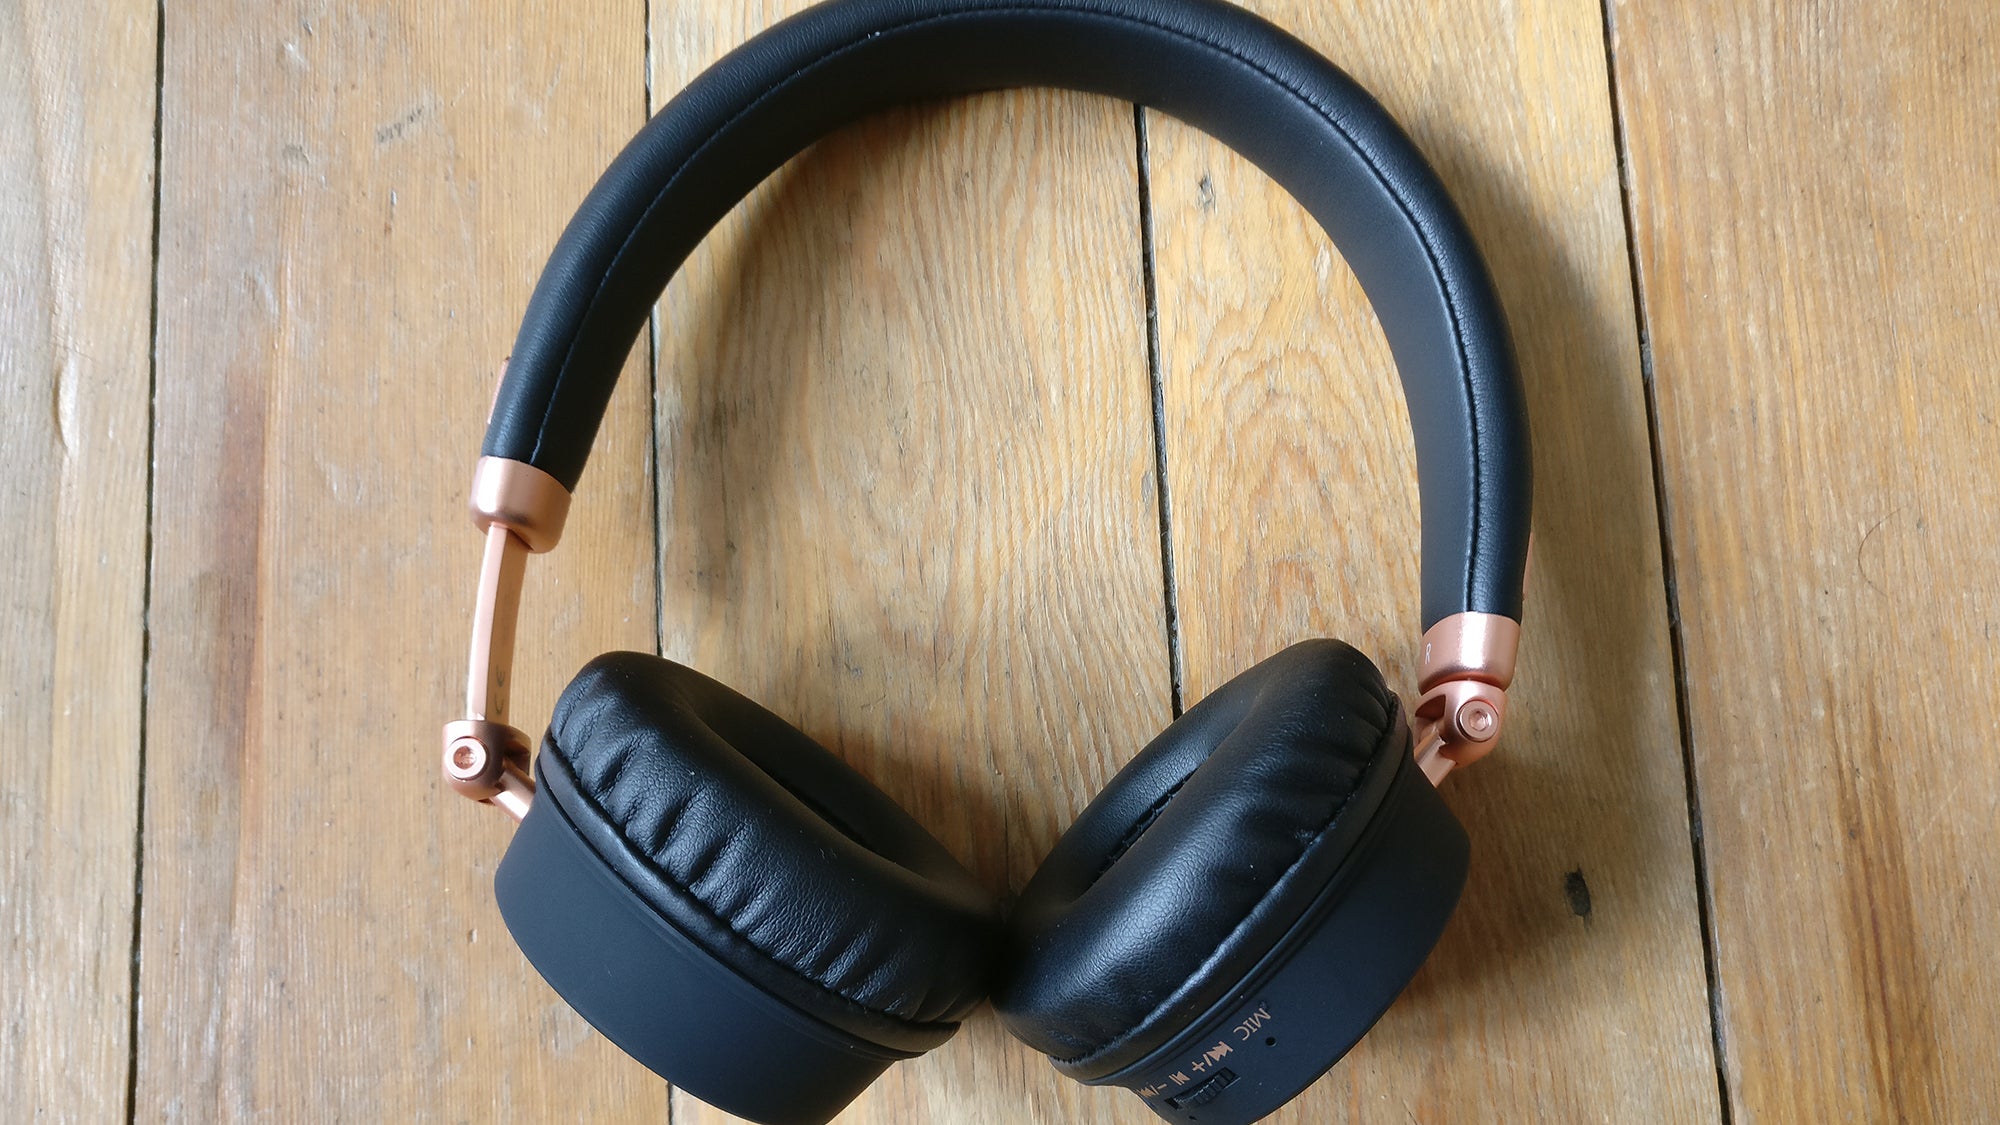 KitSound Harlem wireless headphones on wooden background.